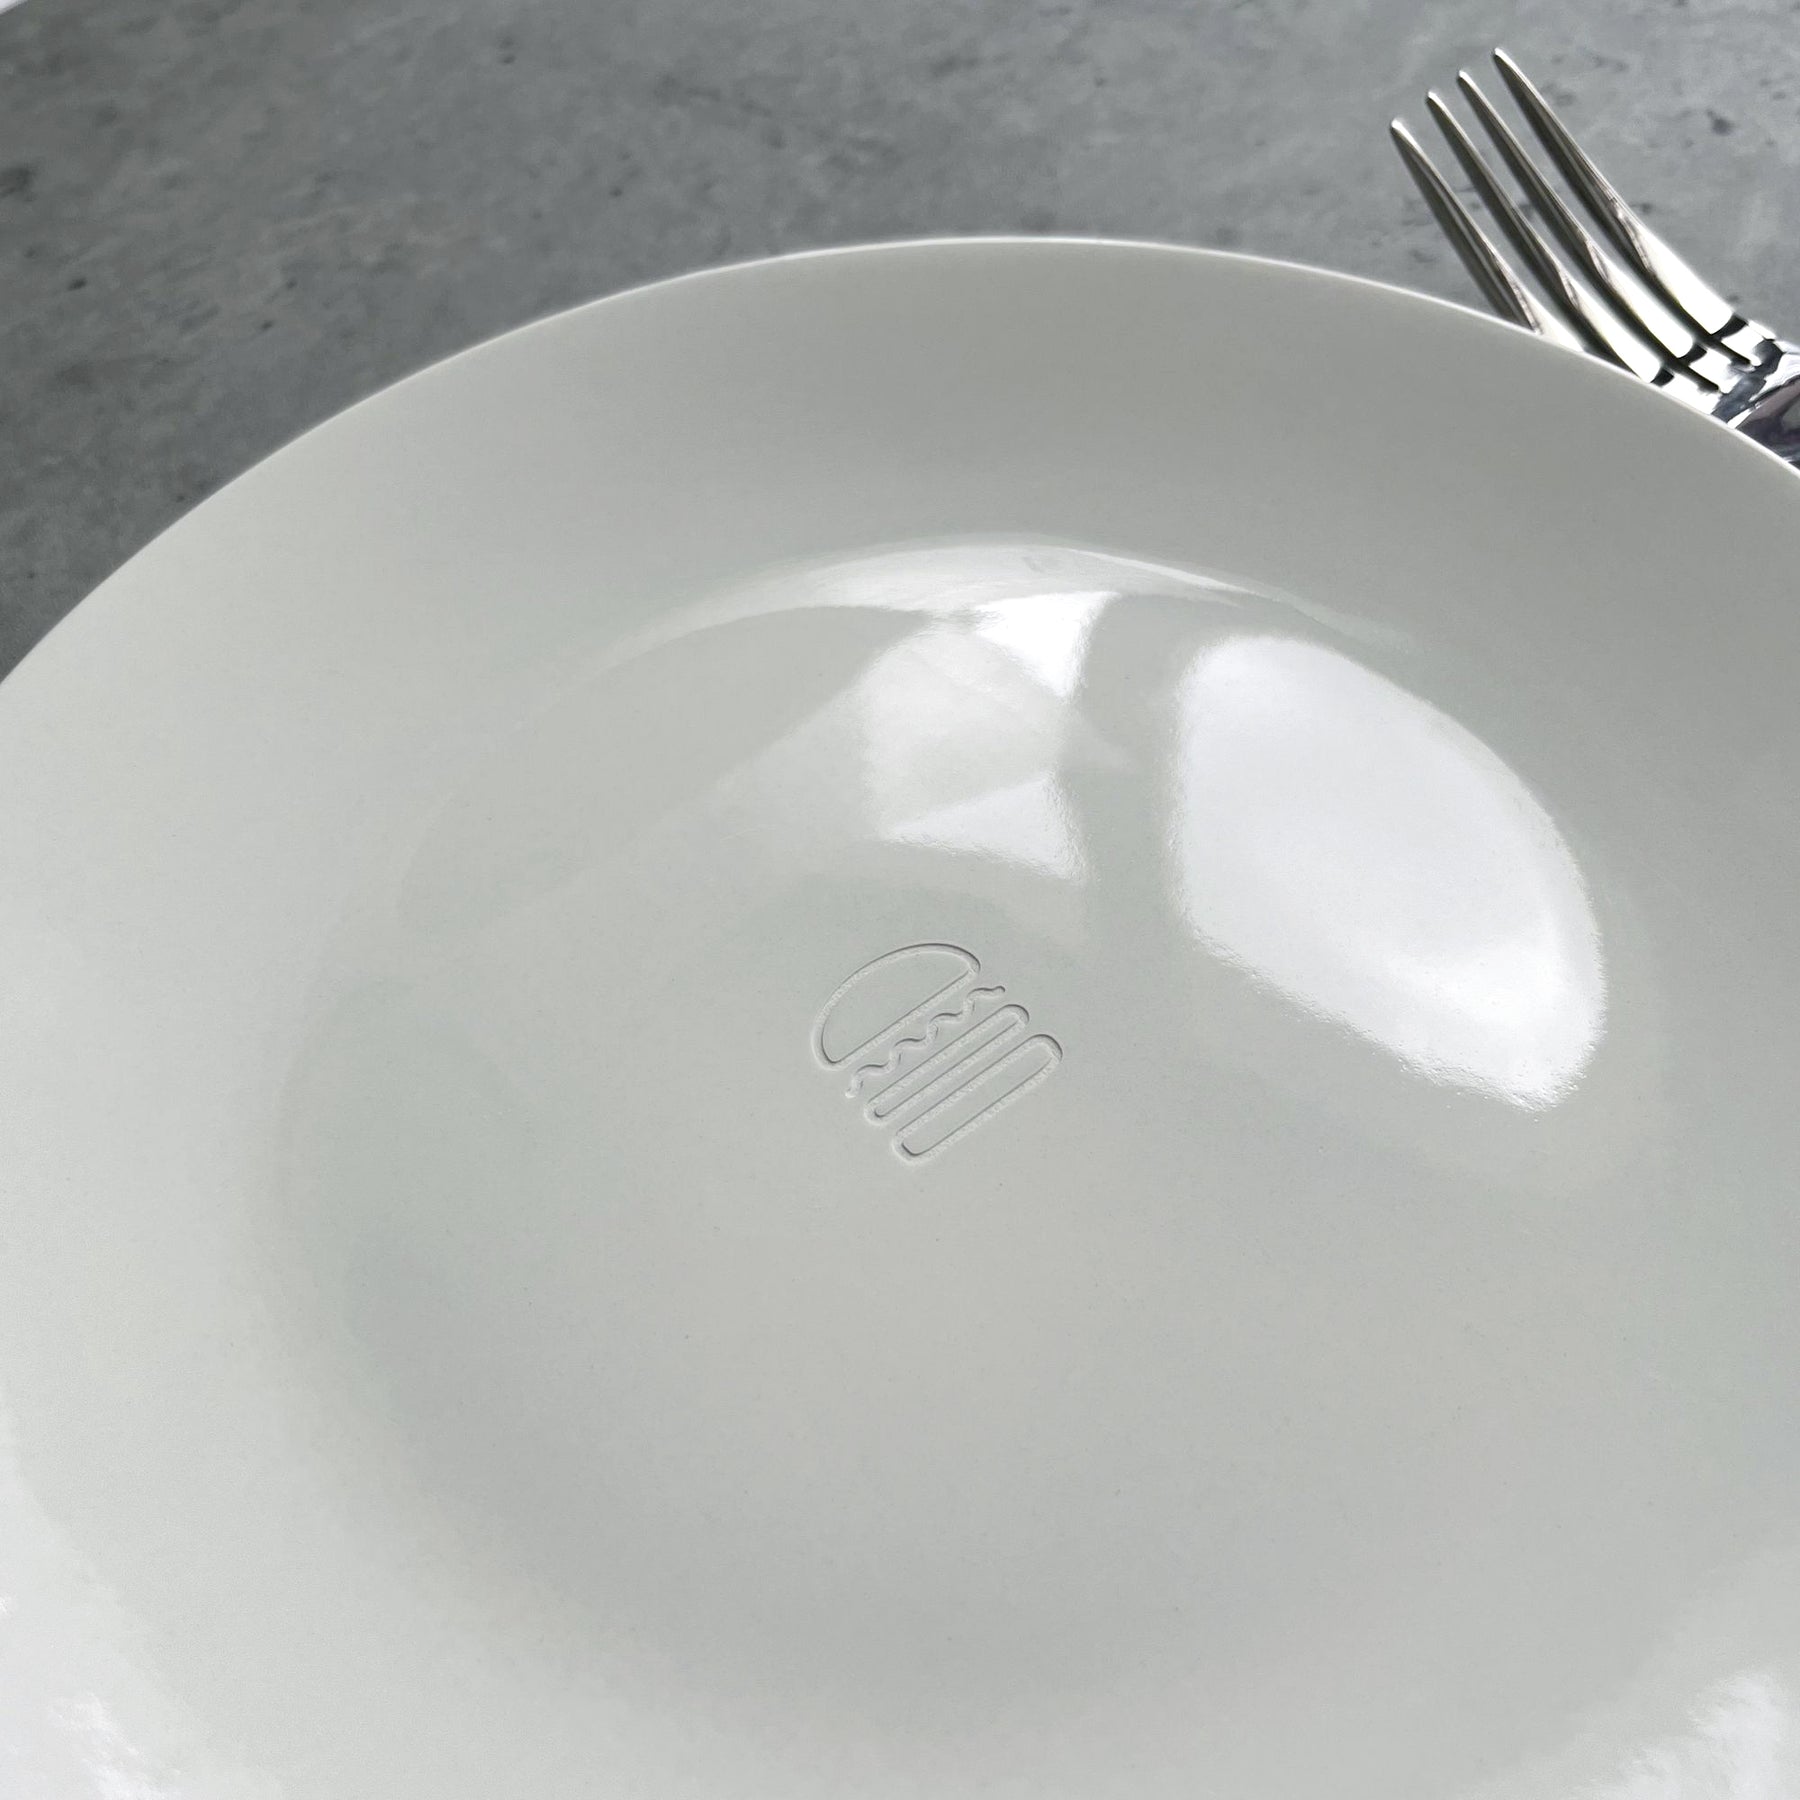 [Case Studies]Shake Shack | Dinner Plate & Cutlery